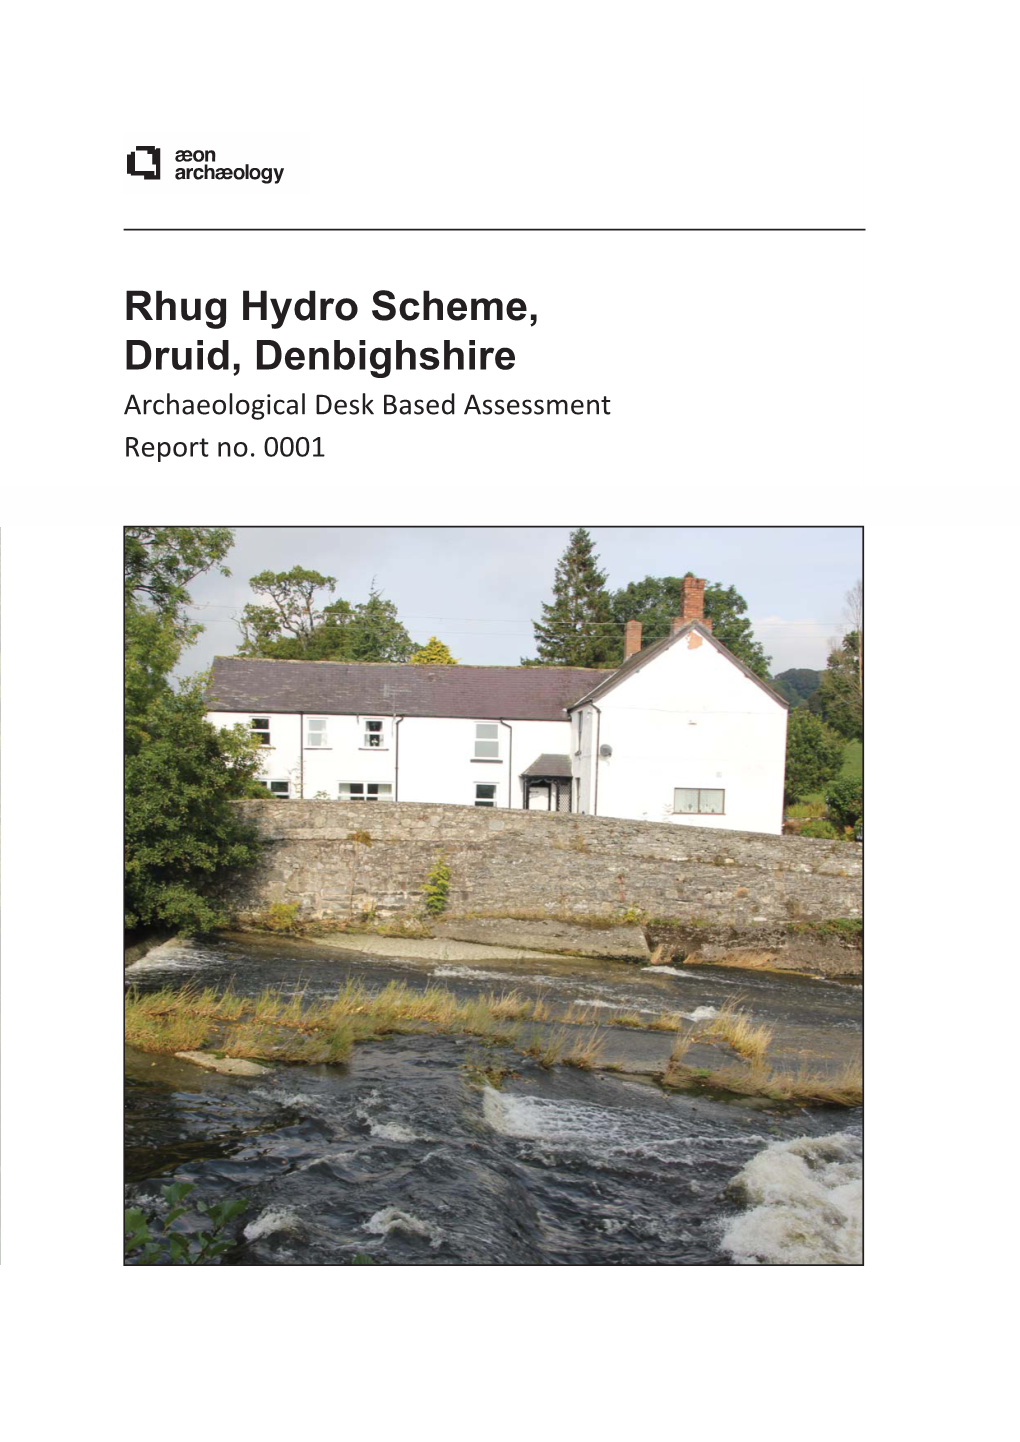 Rhug Hydro Scheme, Druid, Denbighshire Archaeological Desk Based Assessment Report No